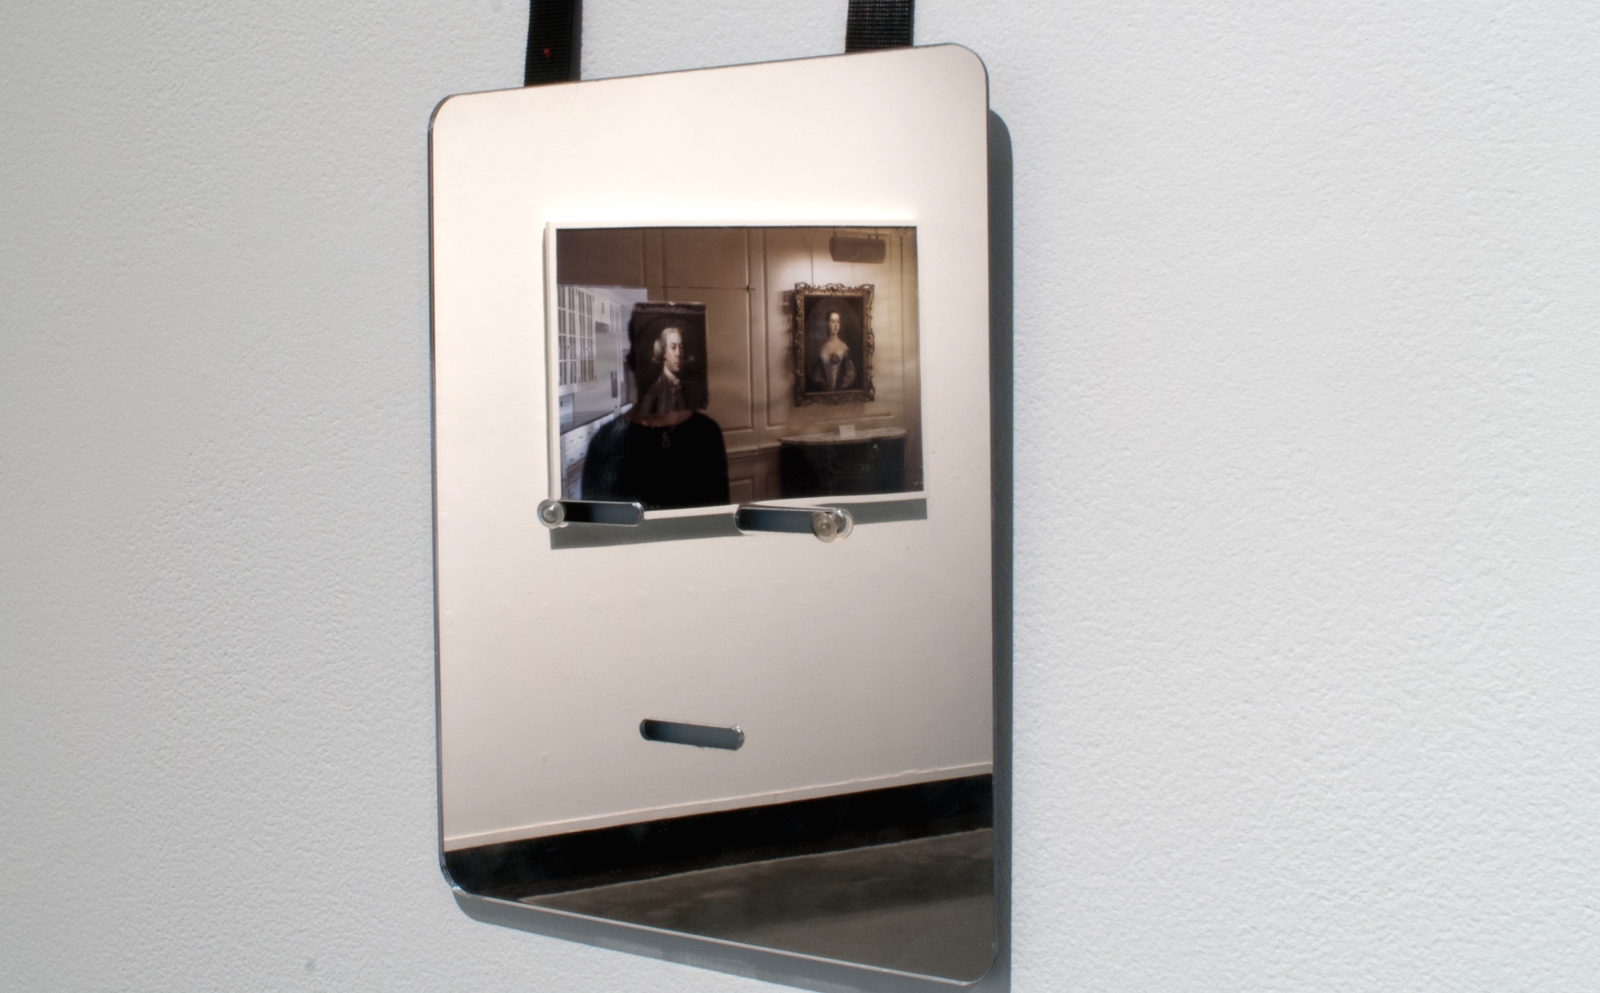 Pedro Lasch, Naturalizations, 2015, installation detail of mirror mask.